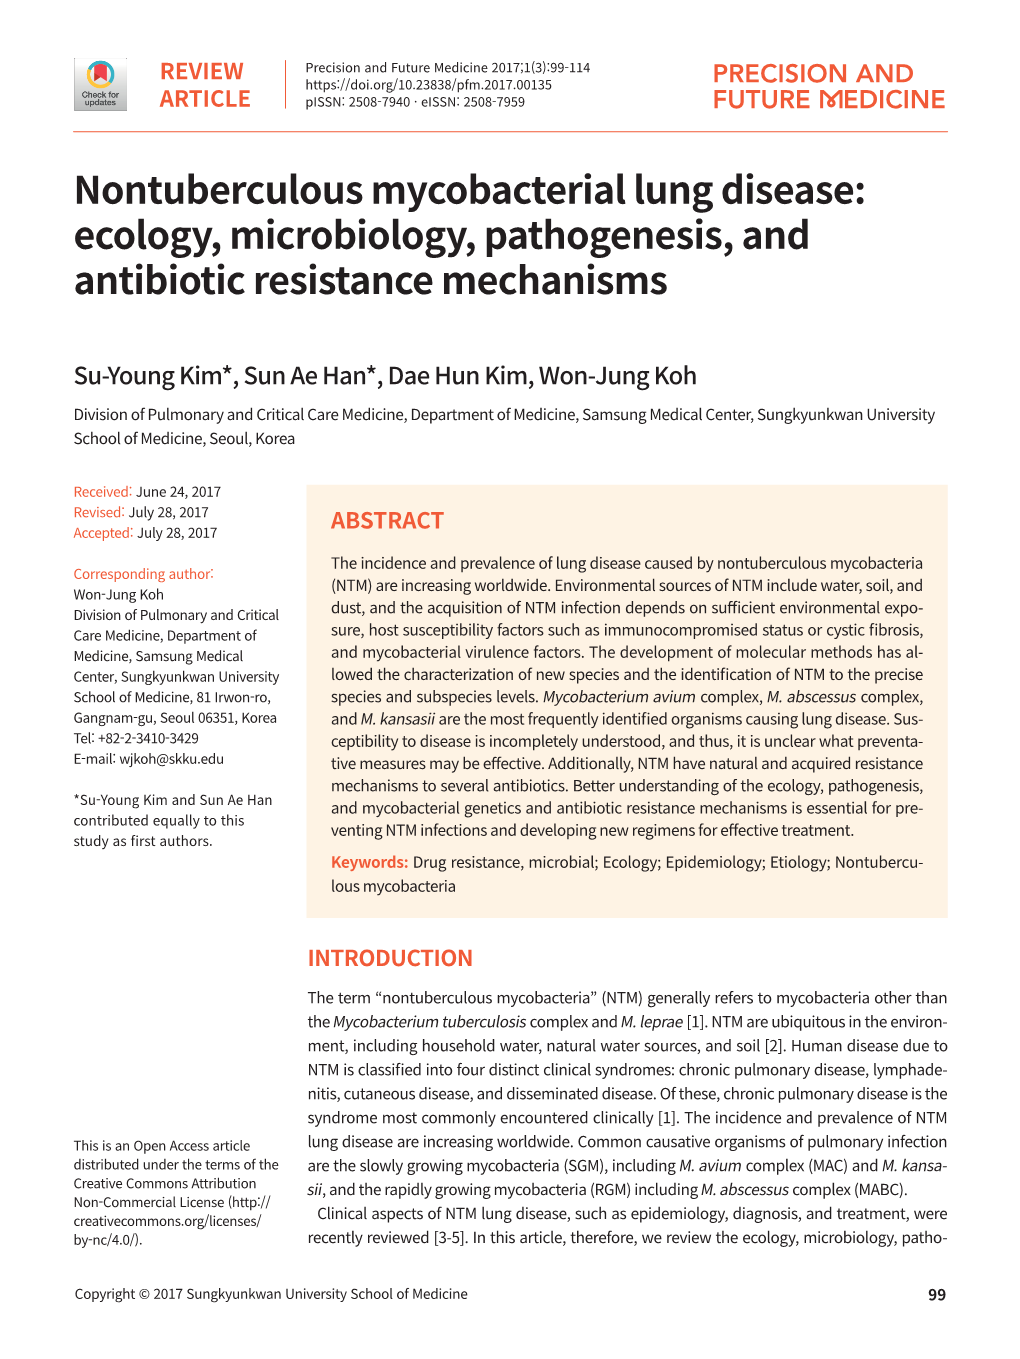 Nontuberculous Mycobacterial Lung Disease: Ecology, Microbiology, Pathogenesis, and Antibiotic Resistance Mechanisms